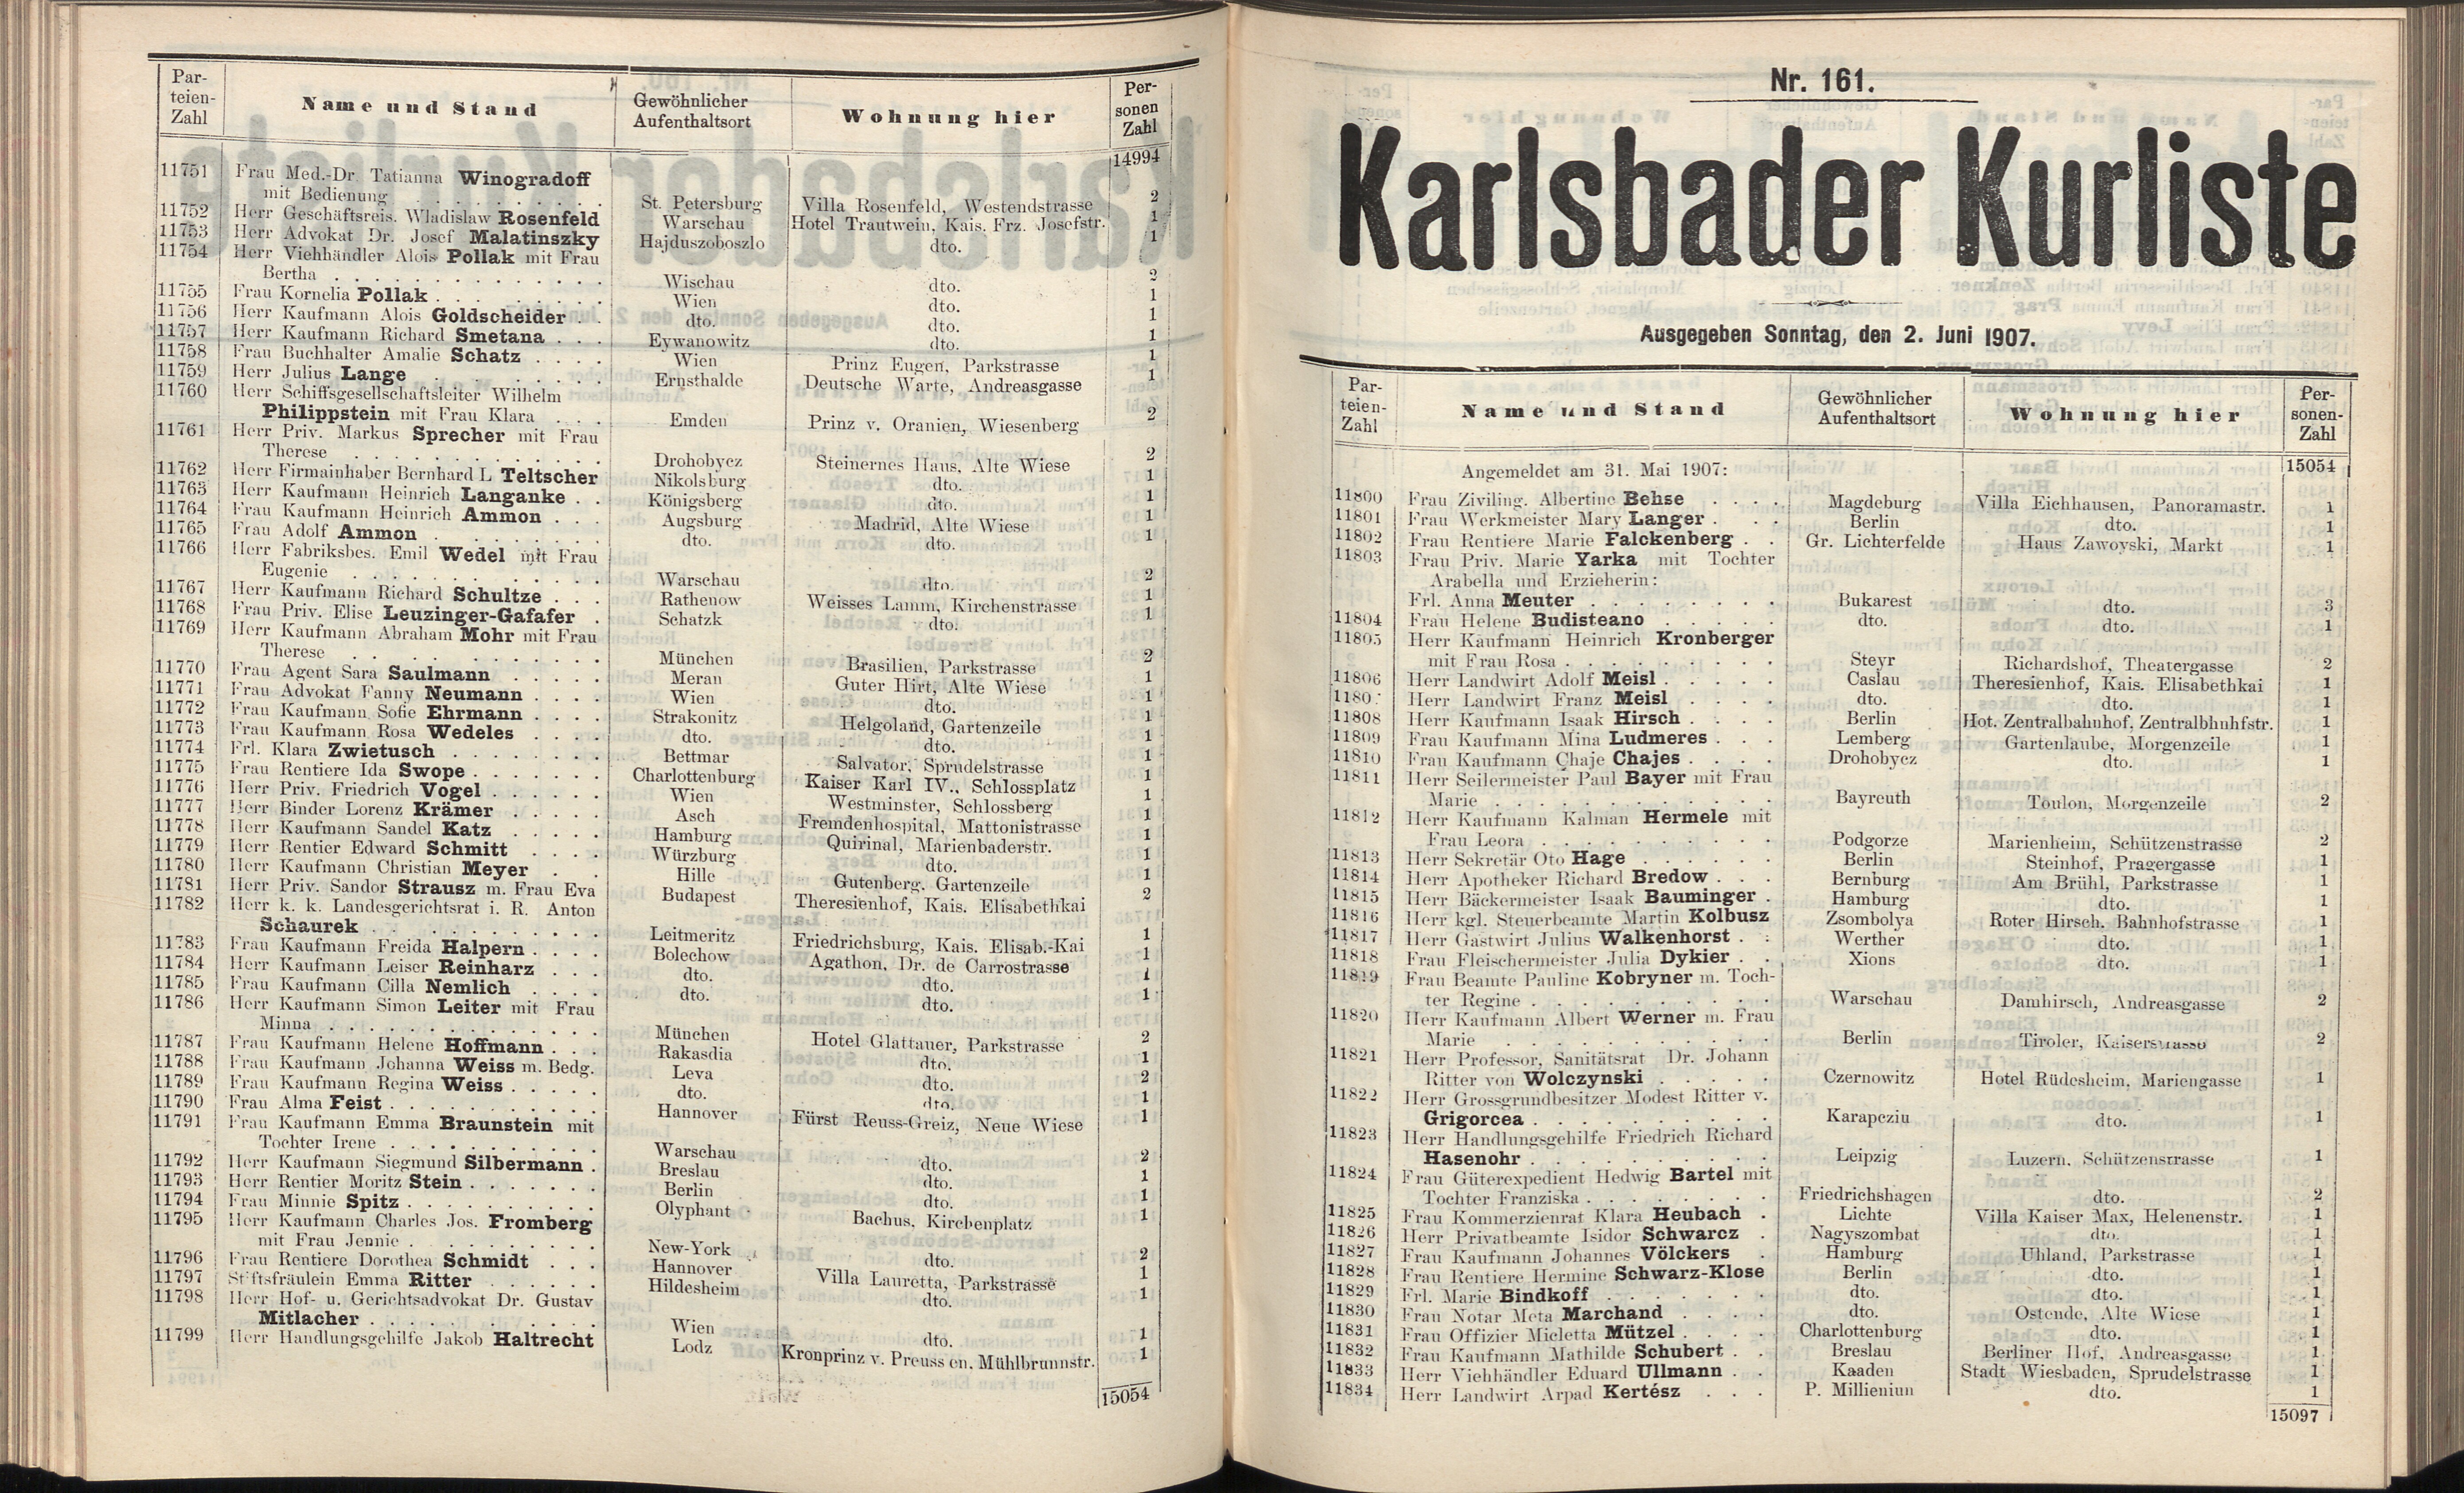 274. soap-kv_knihovna_karlsbader-kurliste-1907_2750